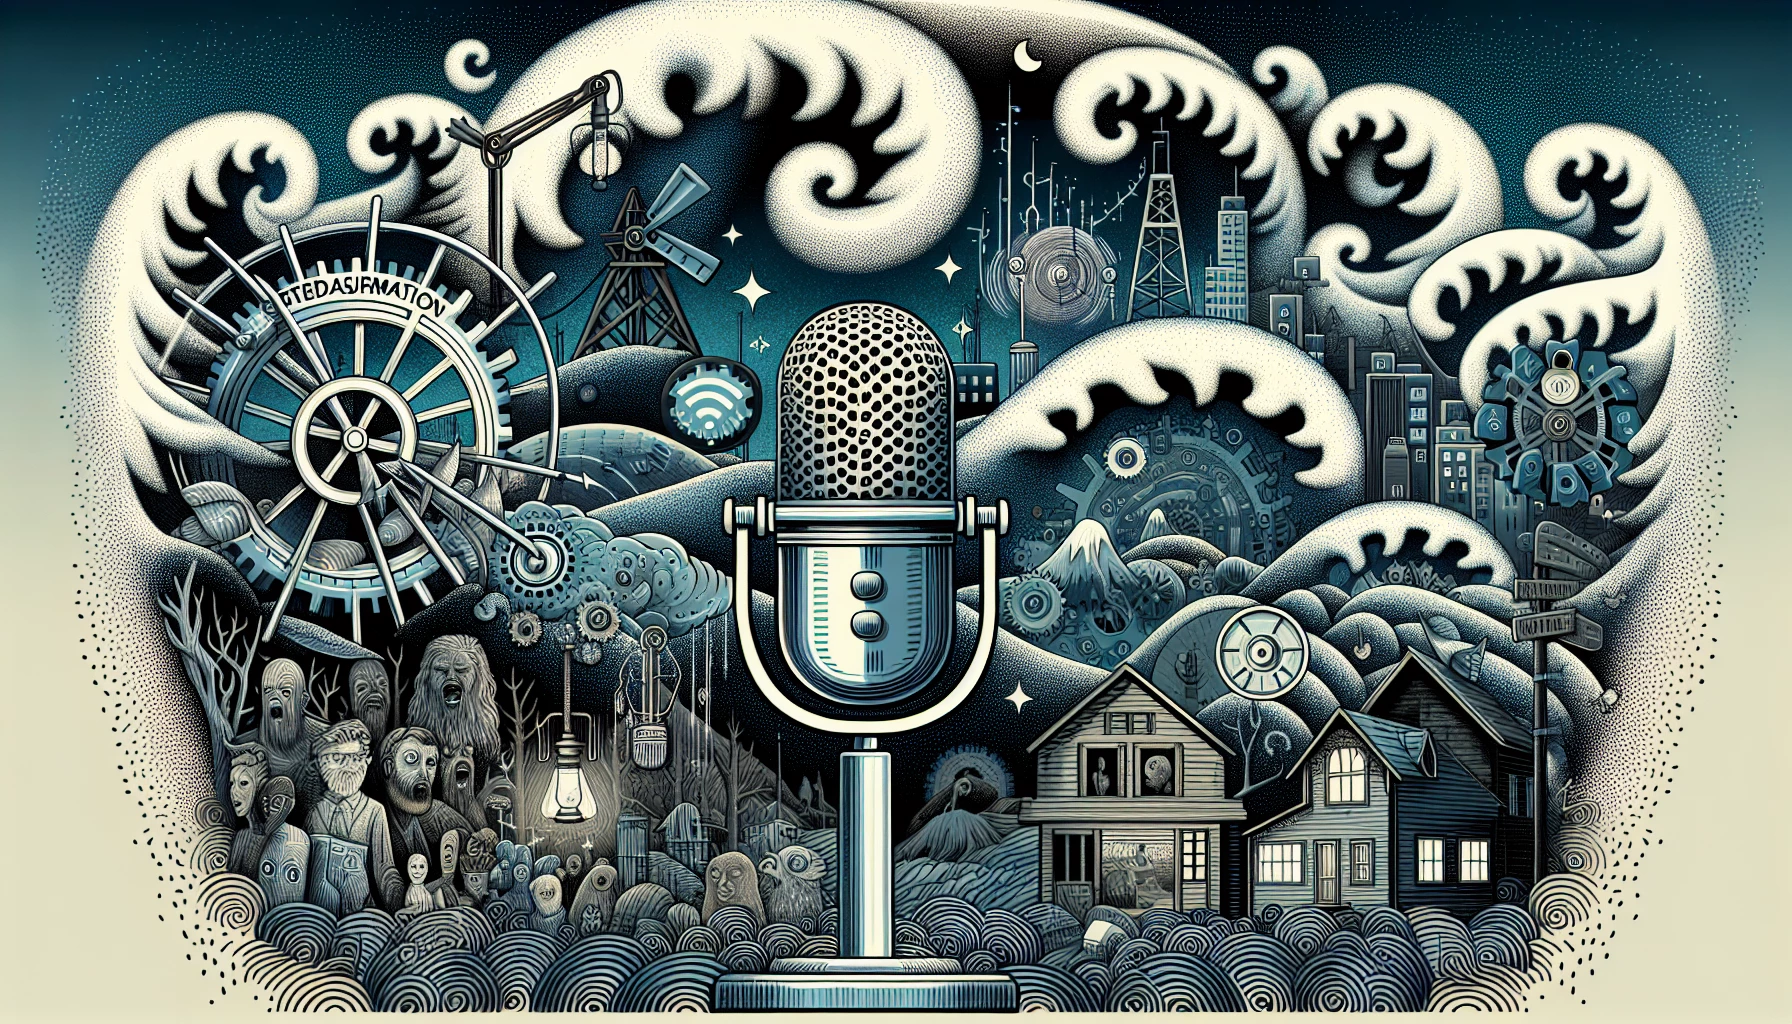 Comment 'Welcome to Night Vale' a révolutionné les podcasts et webradios
